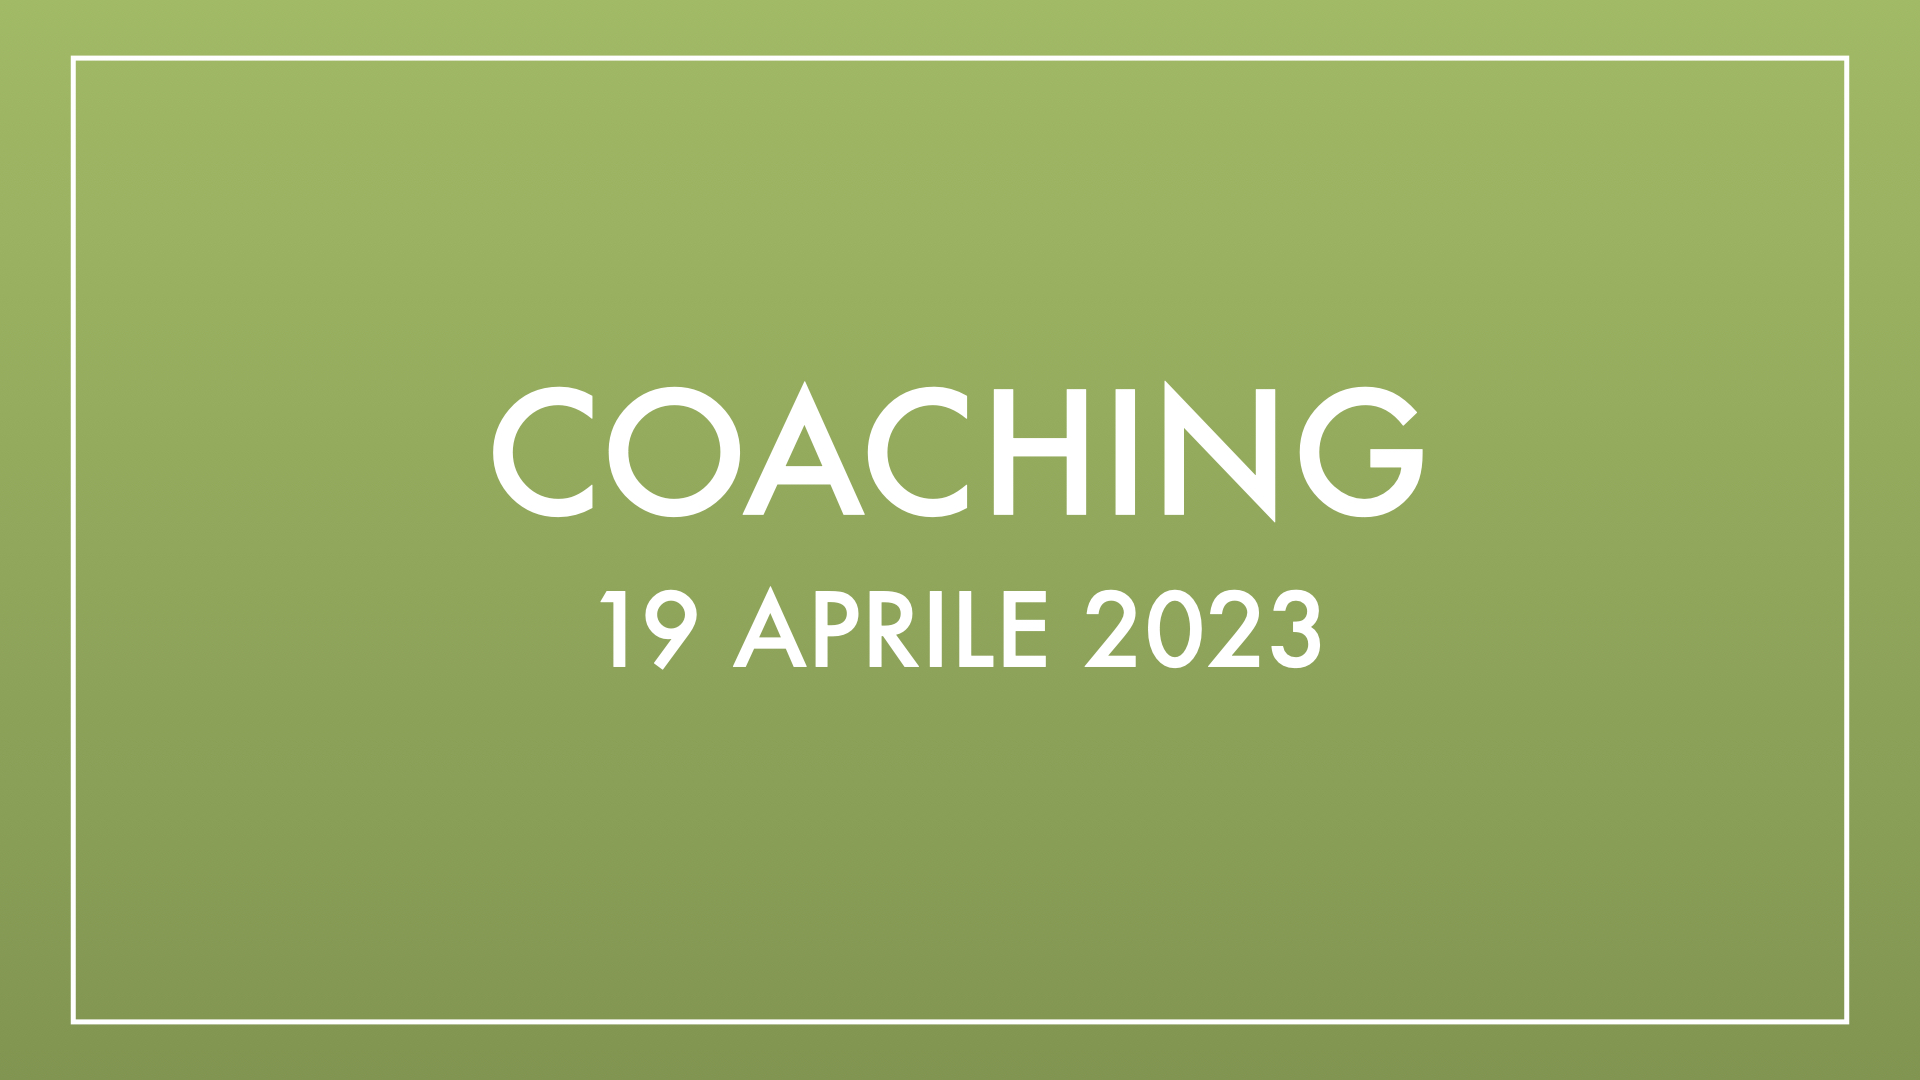 Coaching 19 aprile 2023